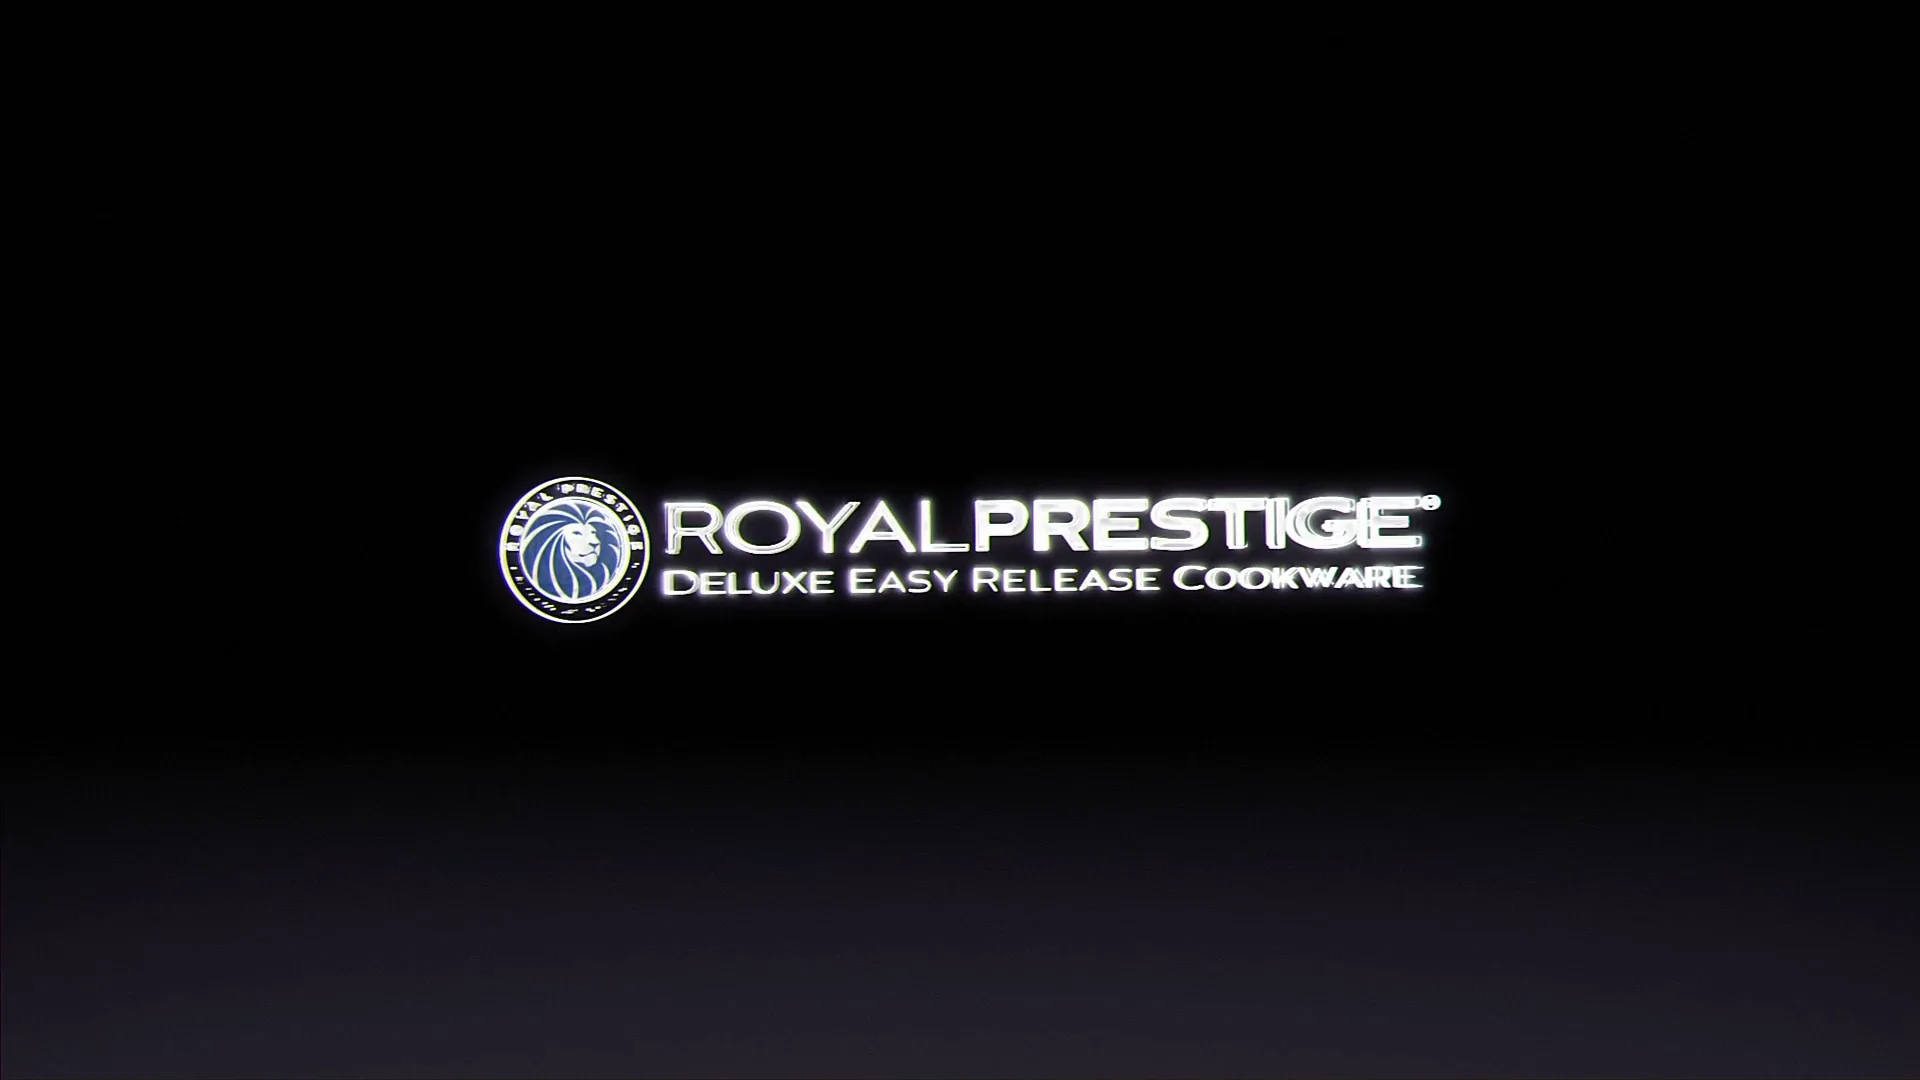 Royal Prestige Sales Videos on Vimeo